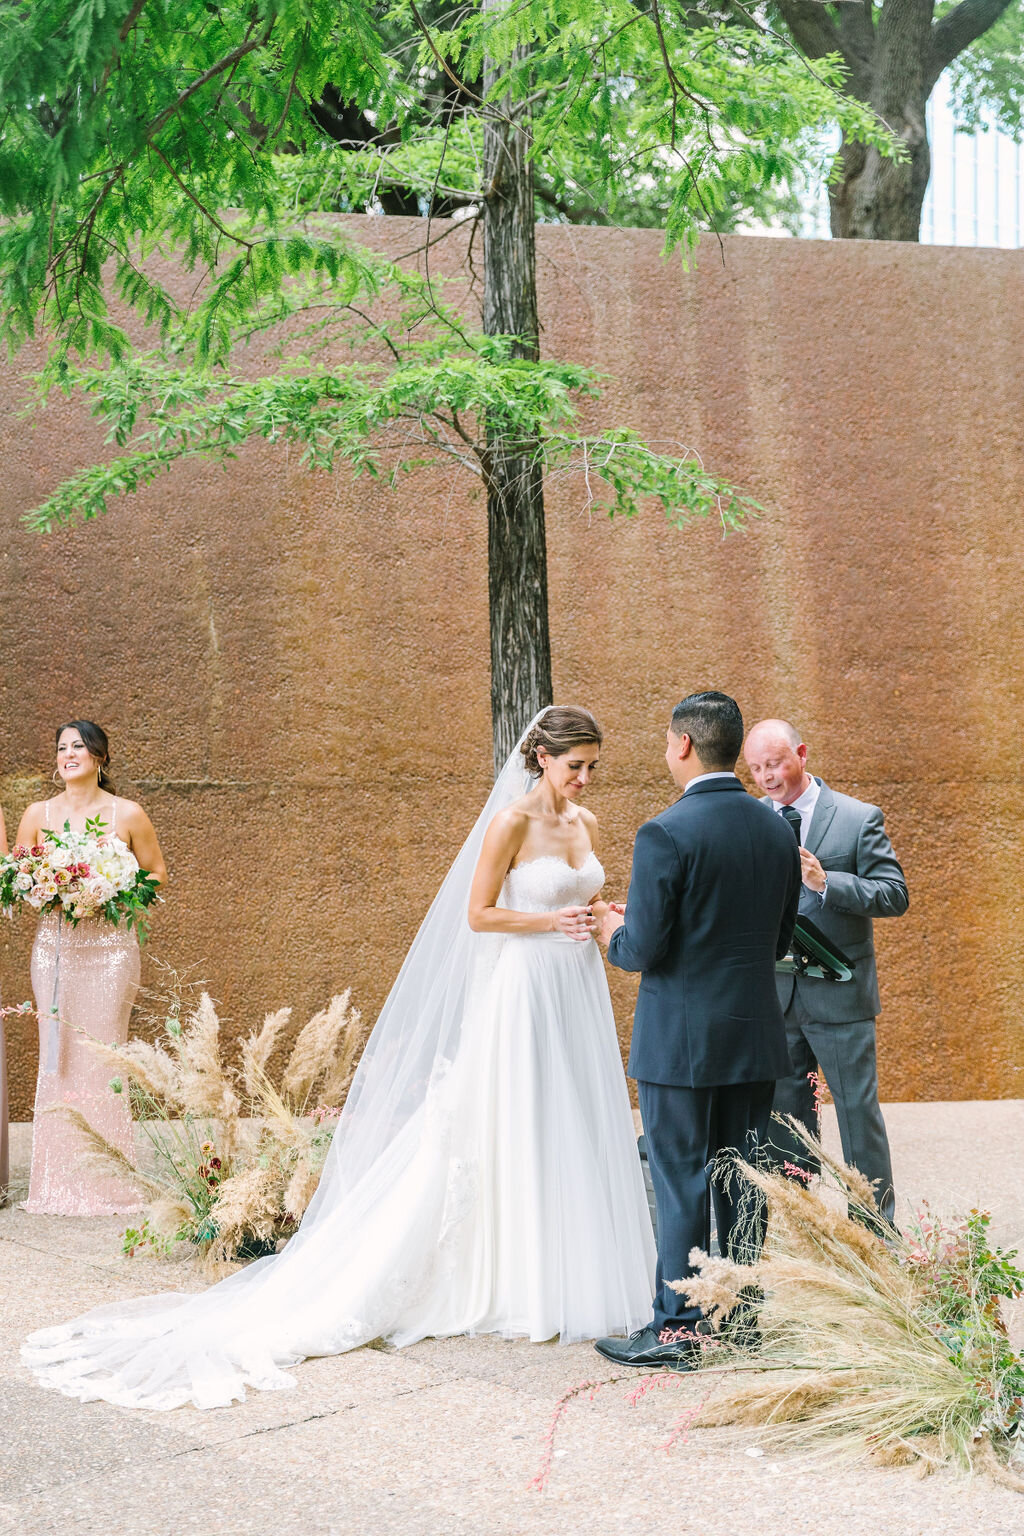 Ellen-Ashton-Photography-Dallas-Wedding-Photographers-Girt-and-gold-events-weddings109.jpg